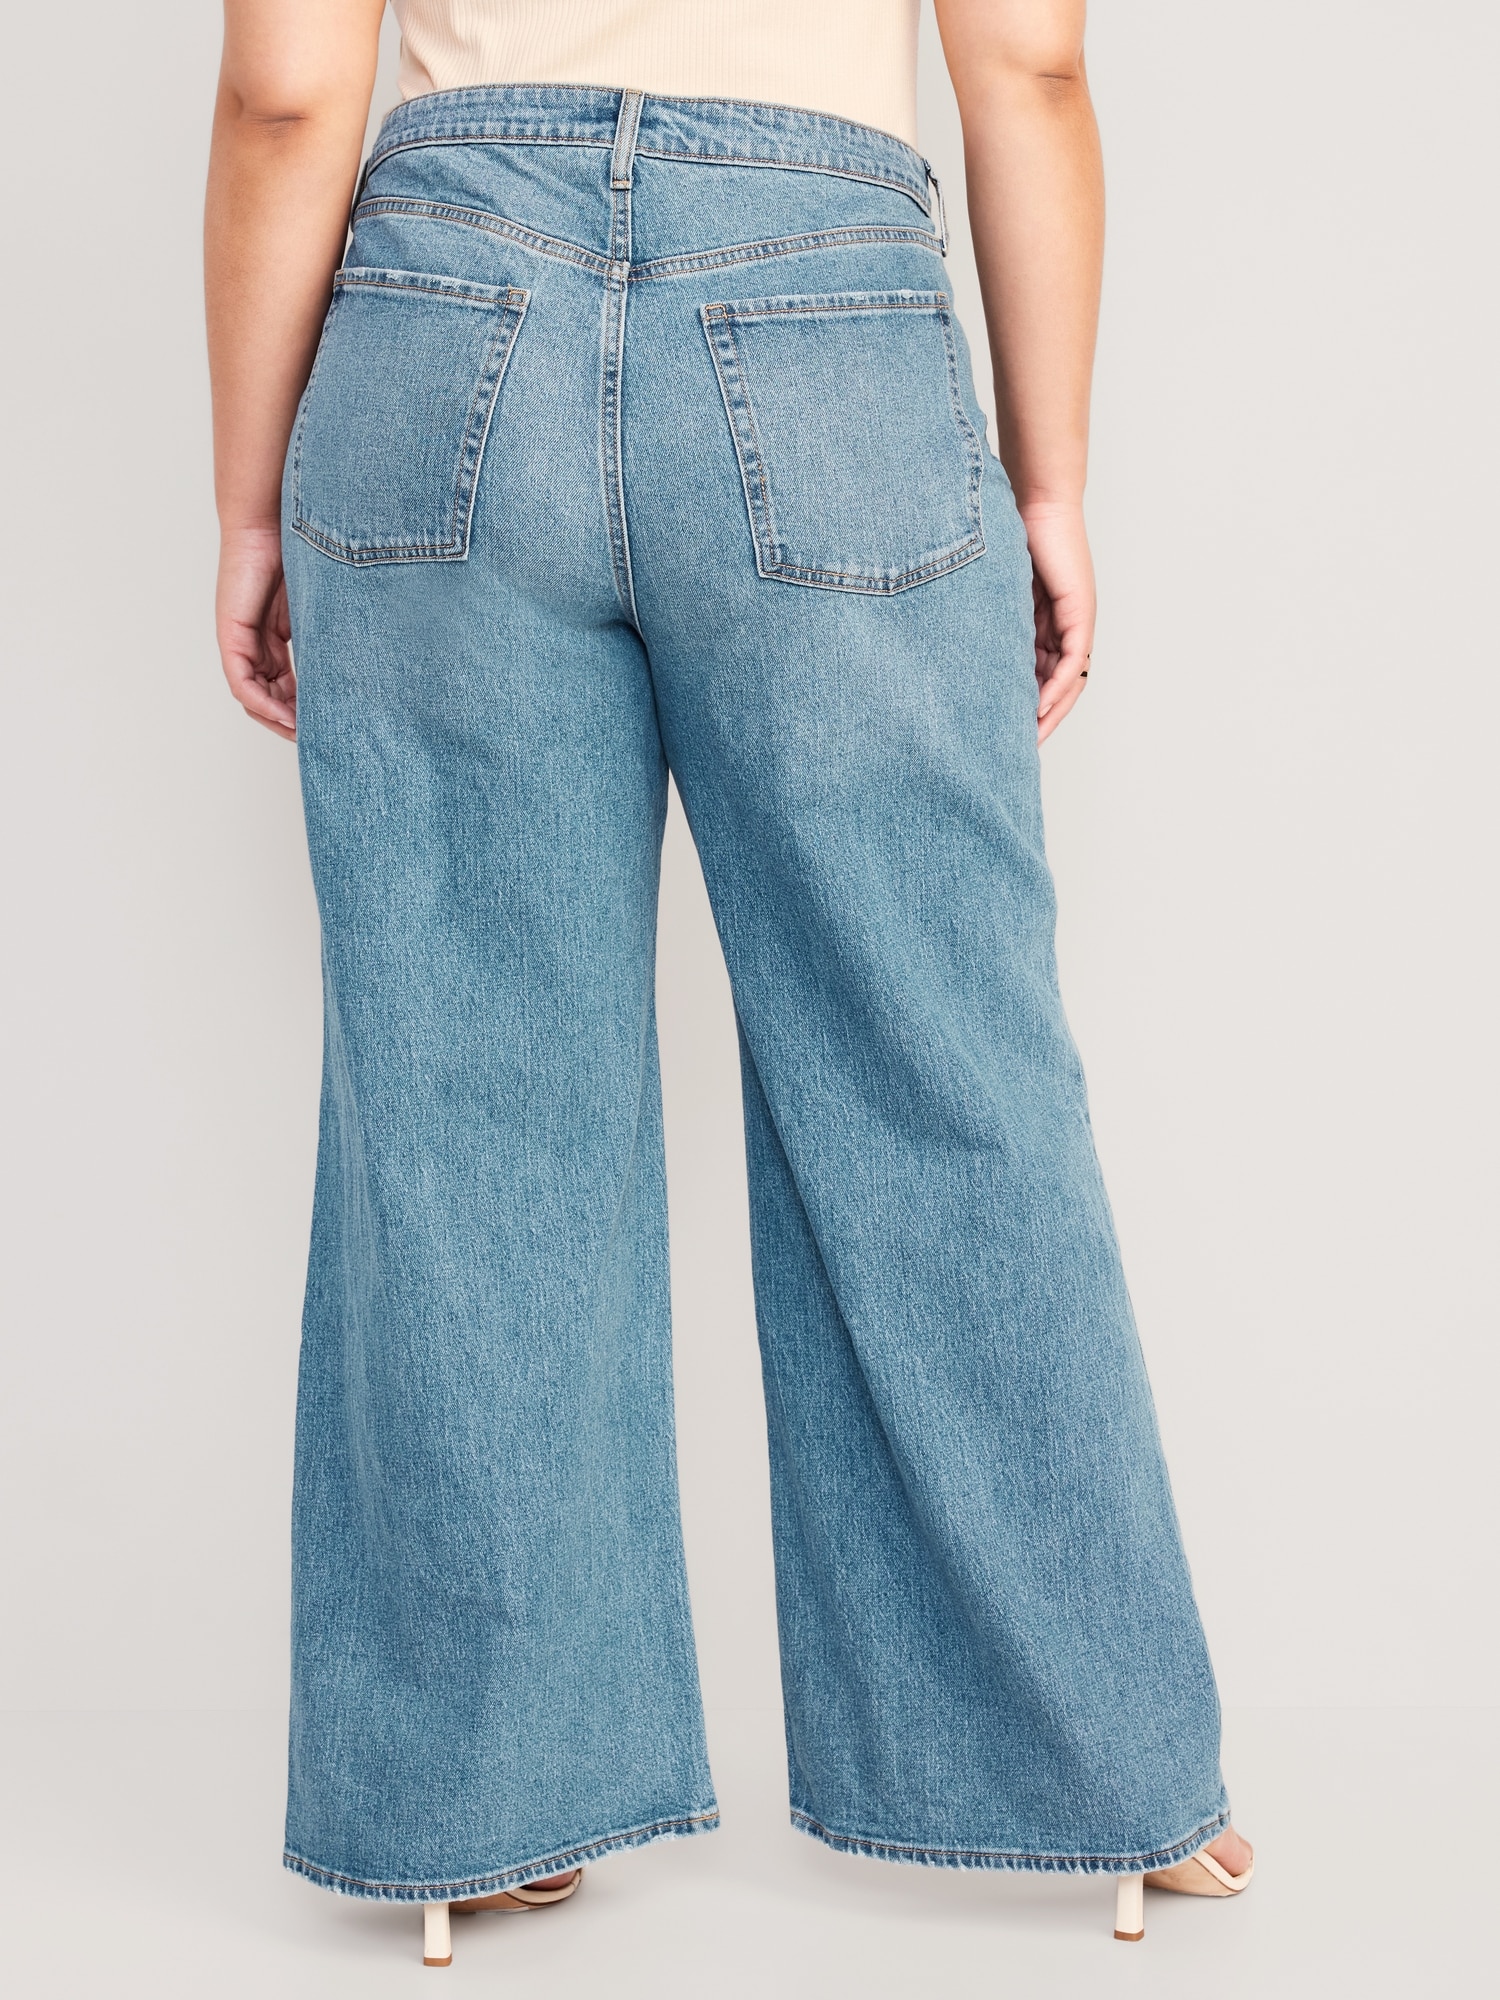 Old Navy Extra HighWaisted Trouser WideLeg Jeans for Women  Bridge  Street Town Centre